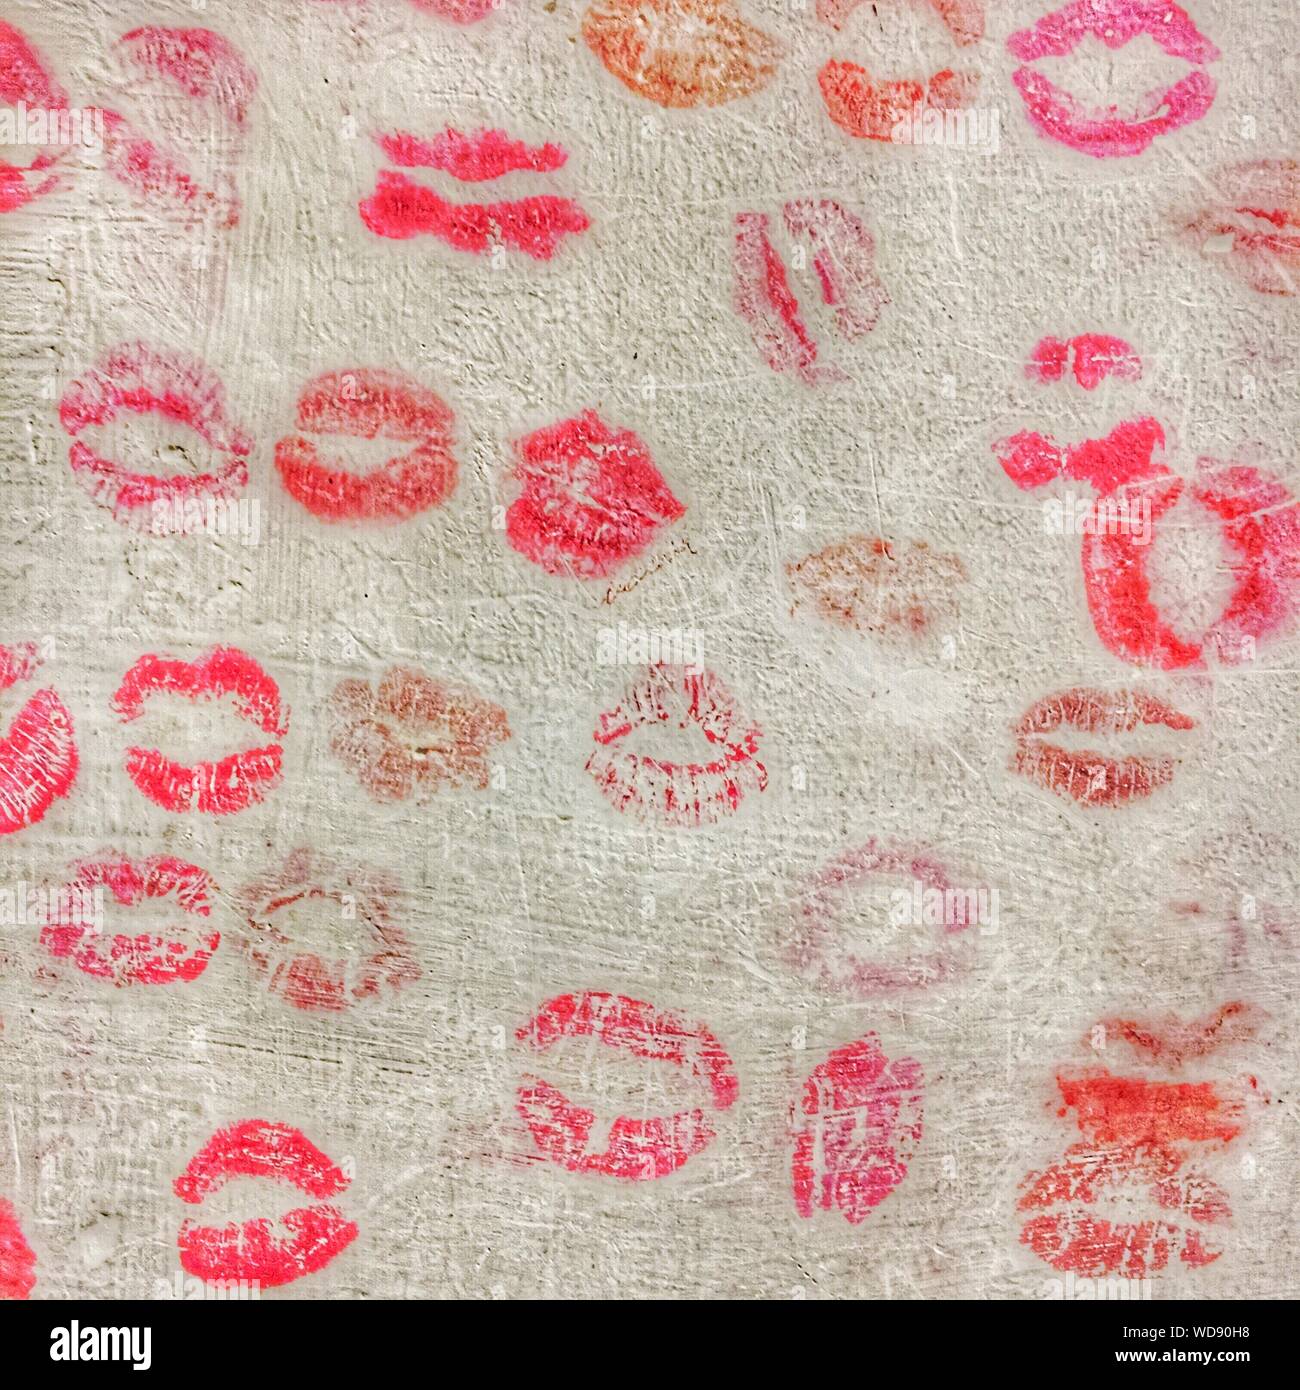 Full Frame Shot Of Lipstick Kiss Stock Photo